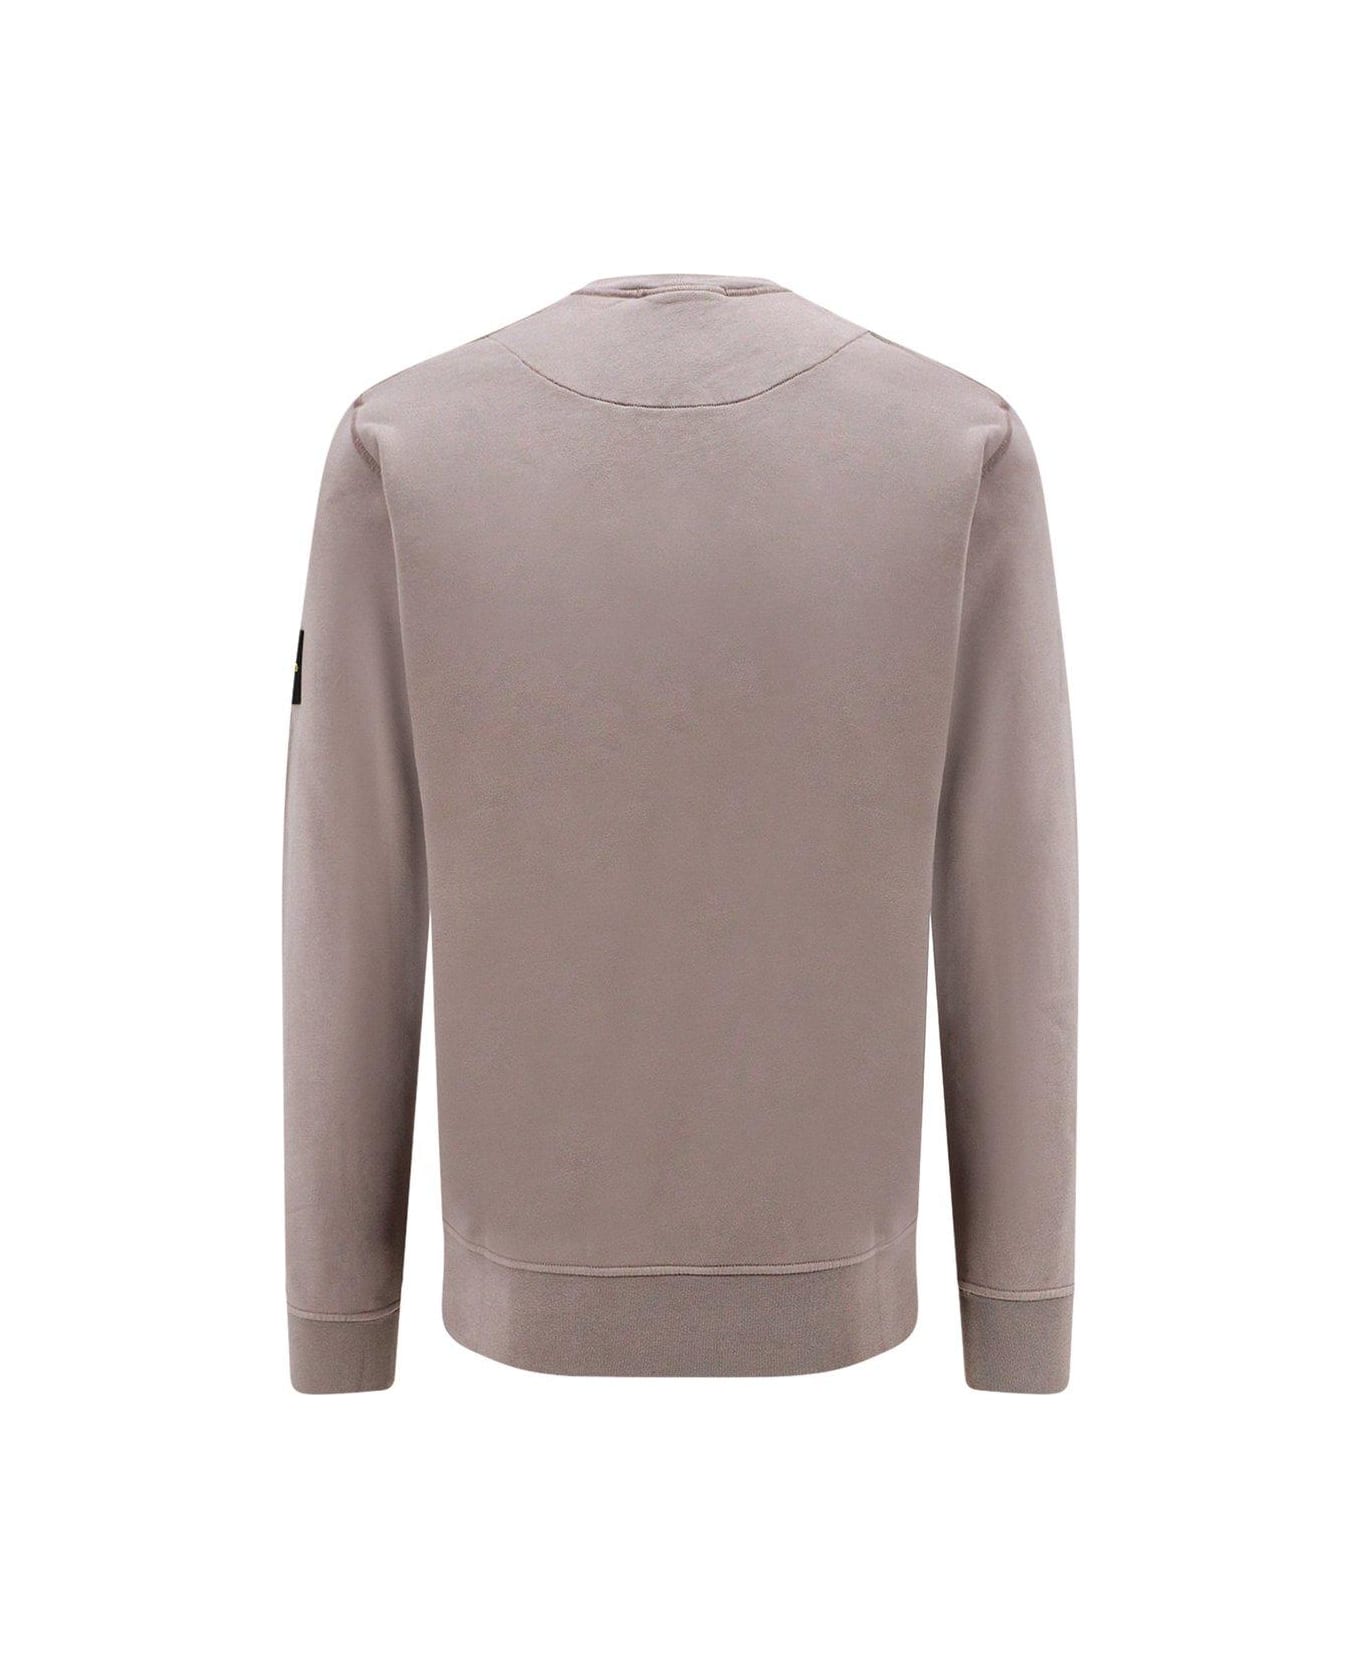 Stone Island Cotton Sweatshirt - Grey